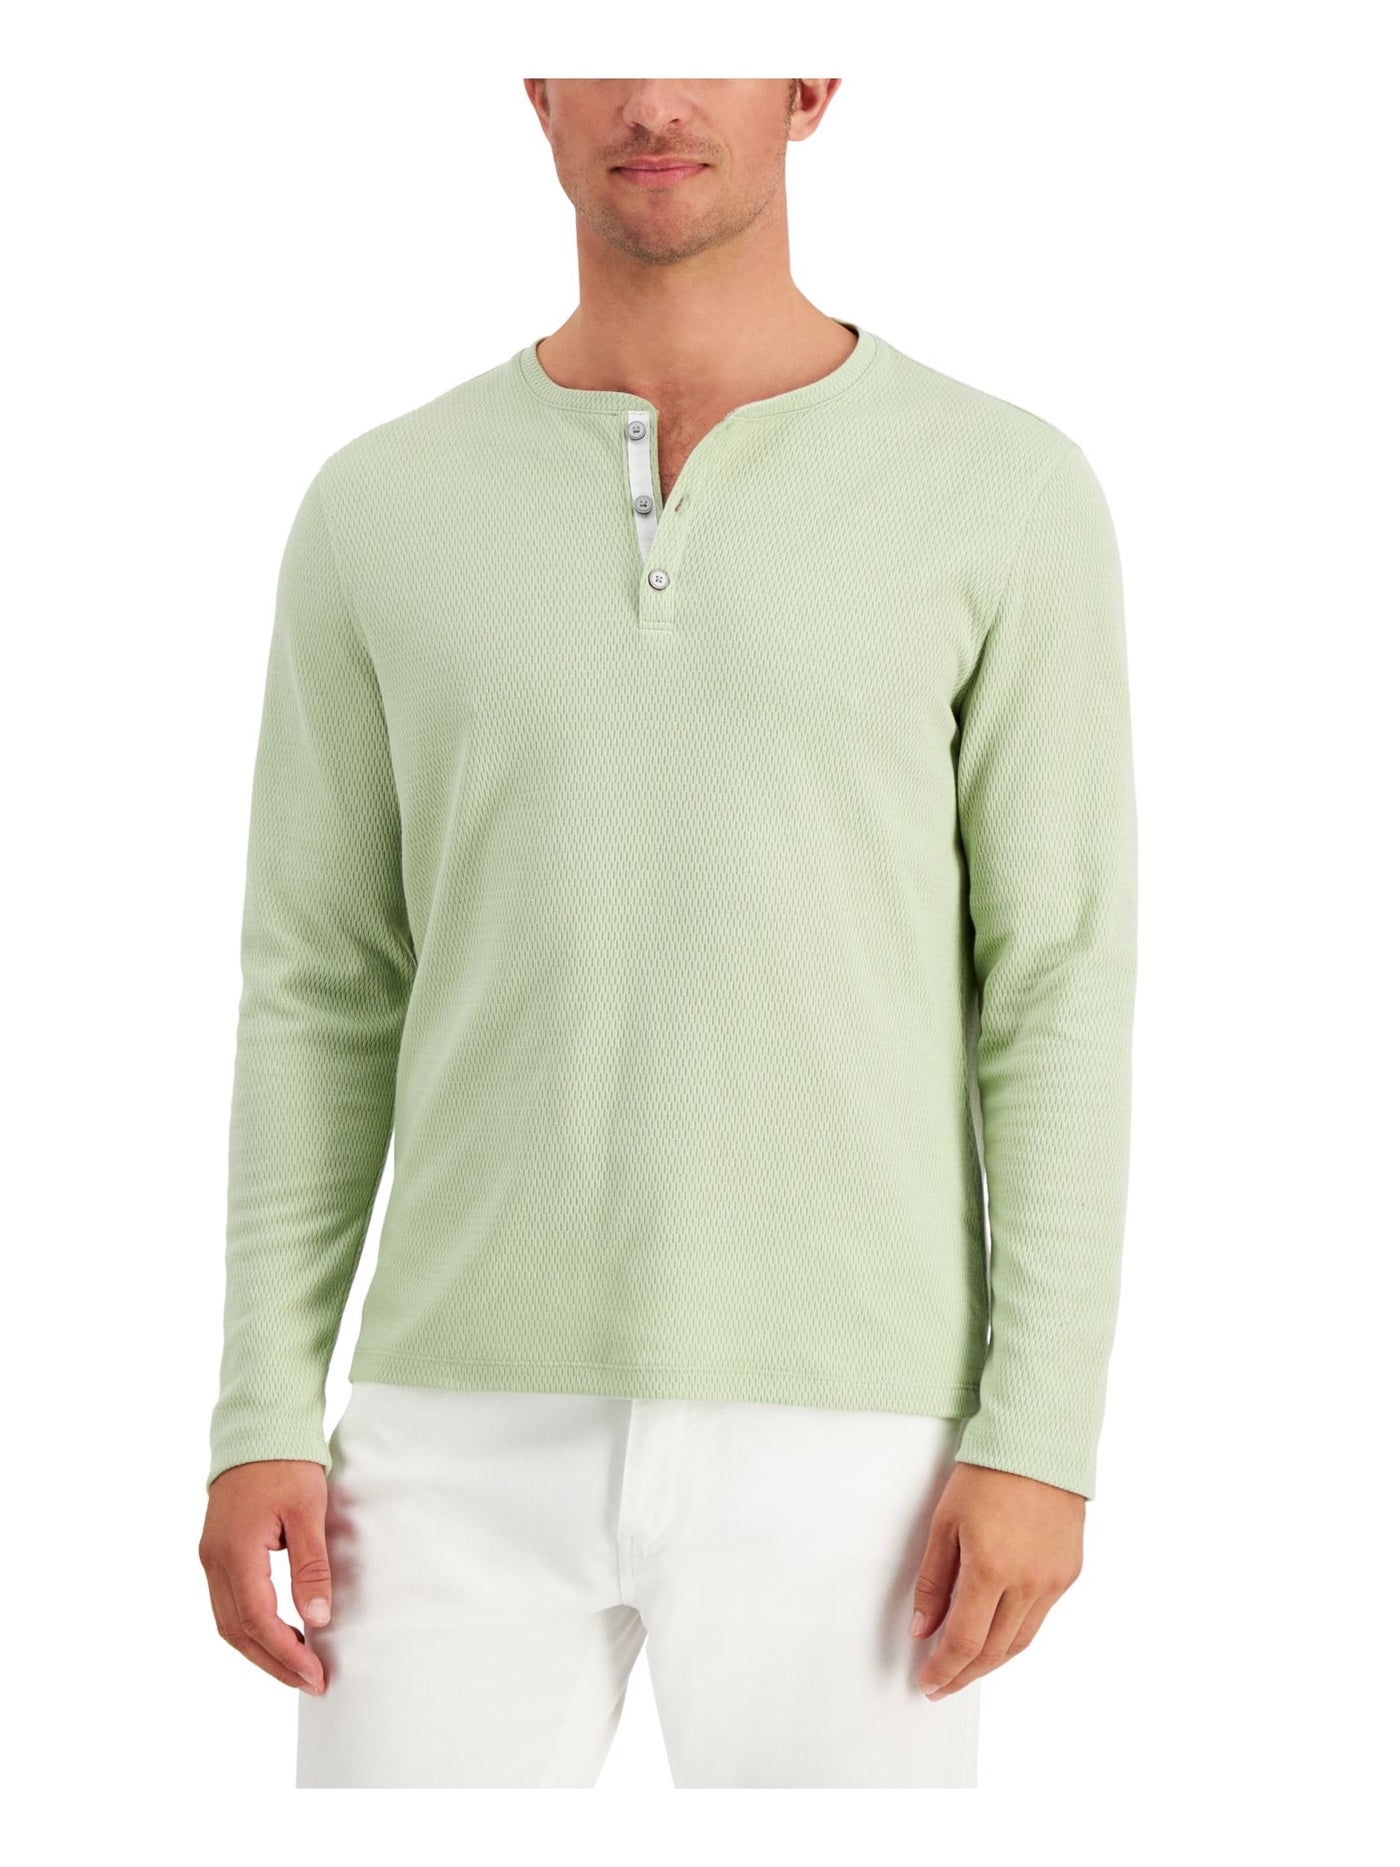 ALFANI Mens Green Long Sleeve Stretch Henley Shirt S